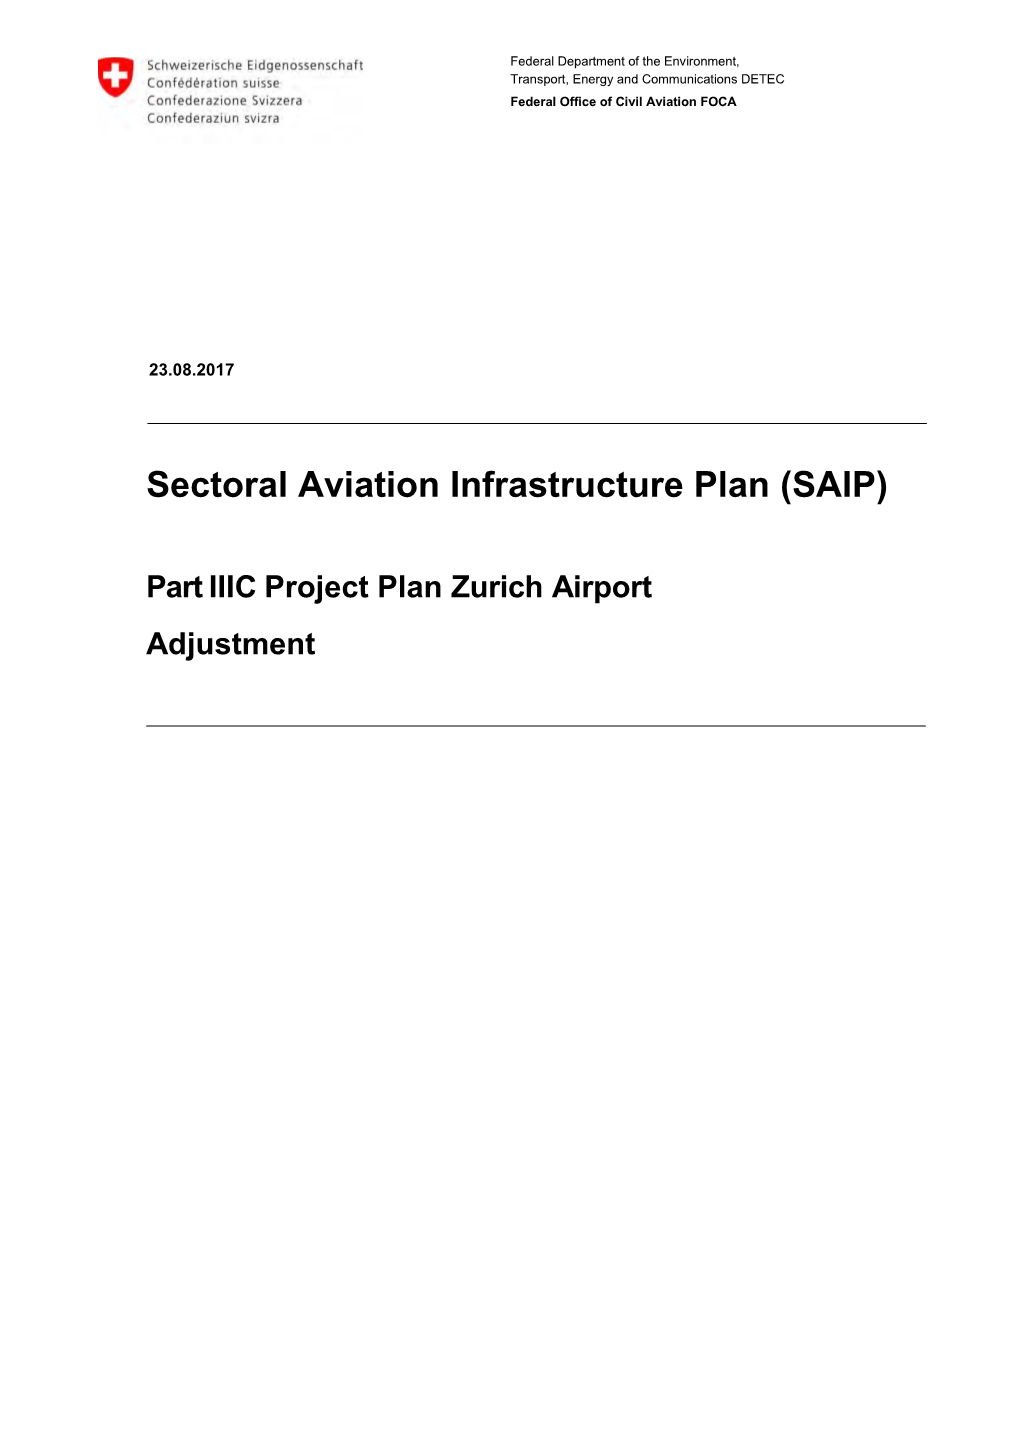 Sectoral Aviation Infrastructure Plan (SAIP)